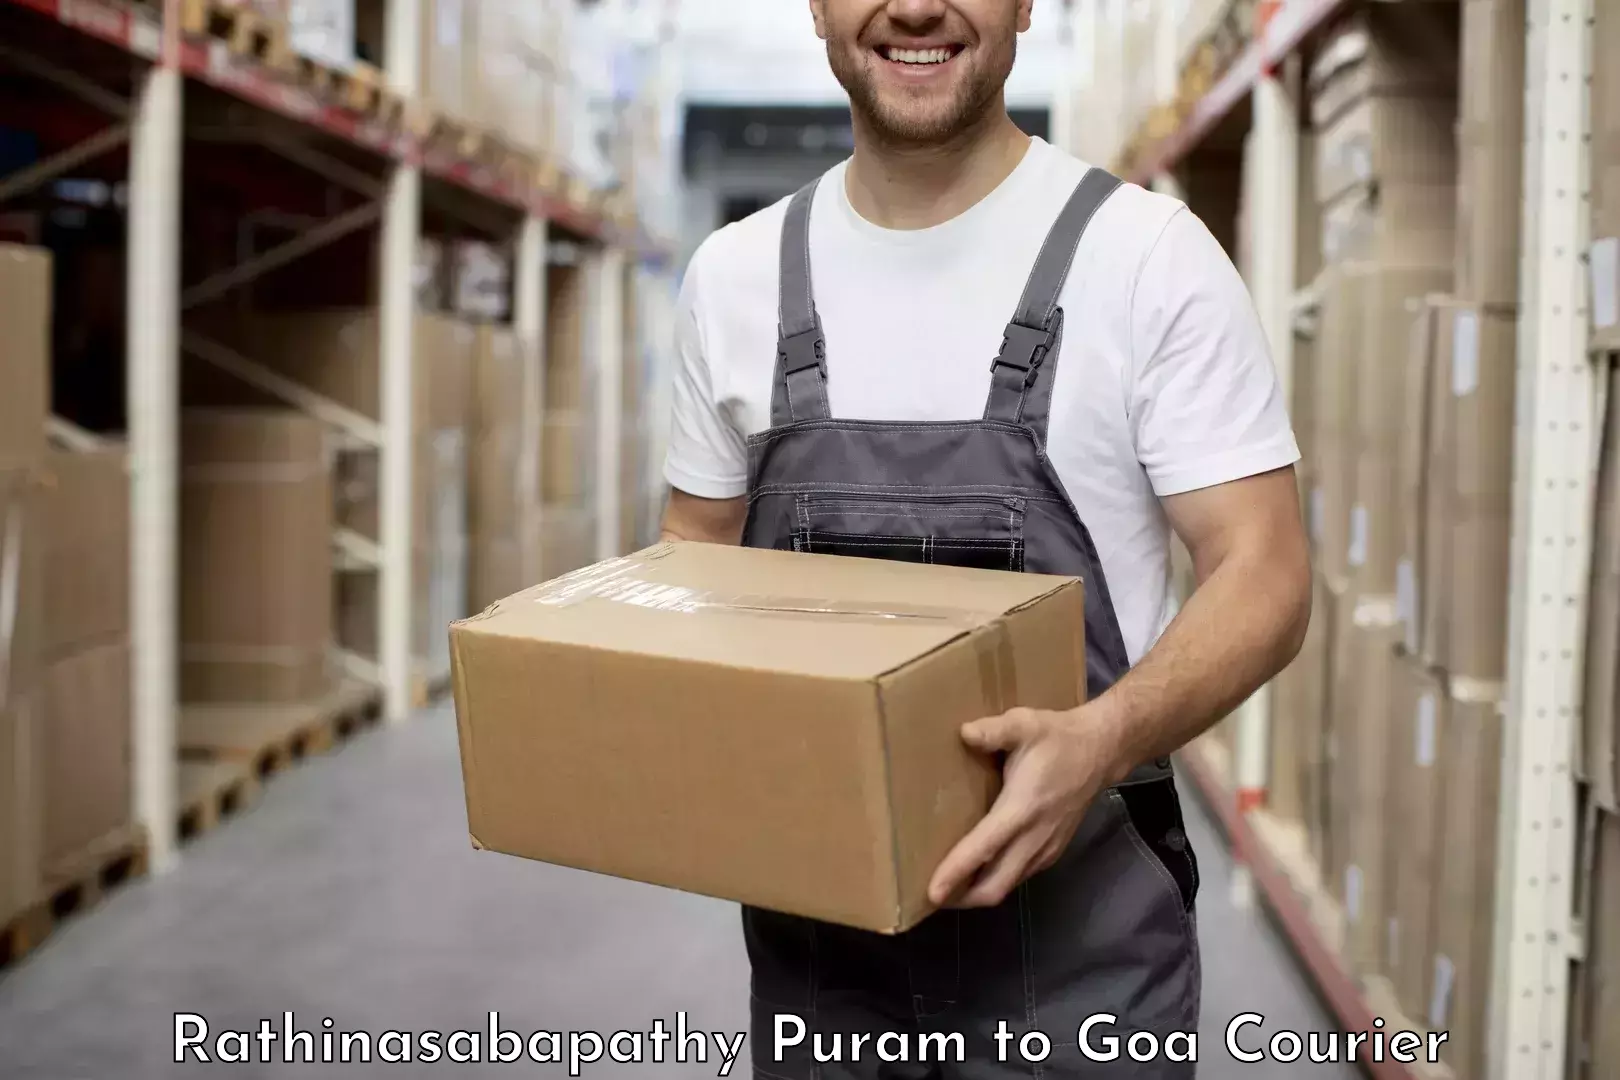 Modern courier technology Rathinasabapathy Puram to Panjim